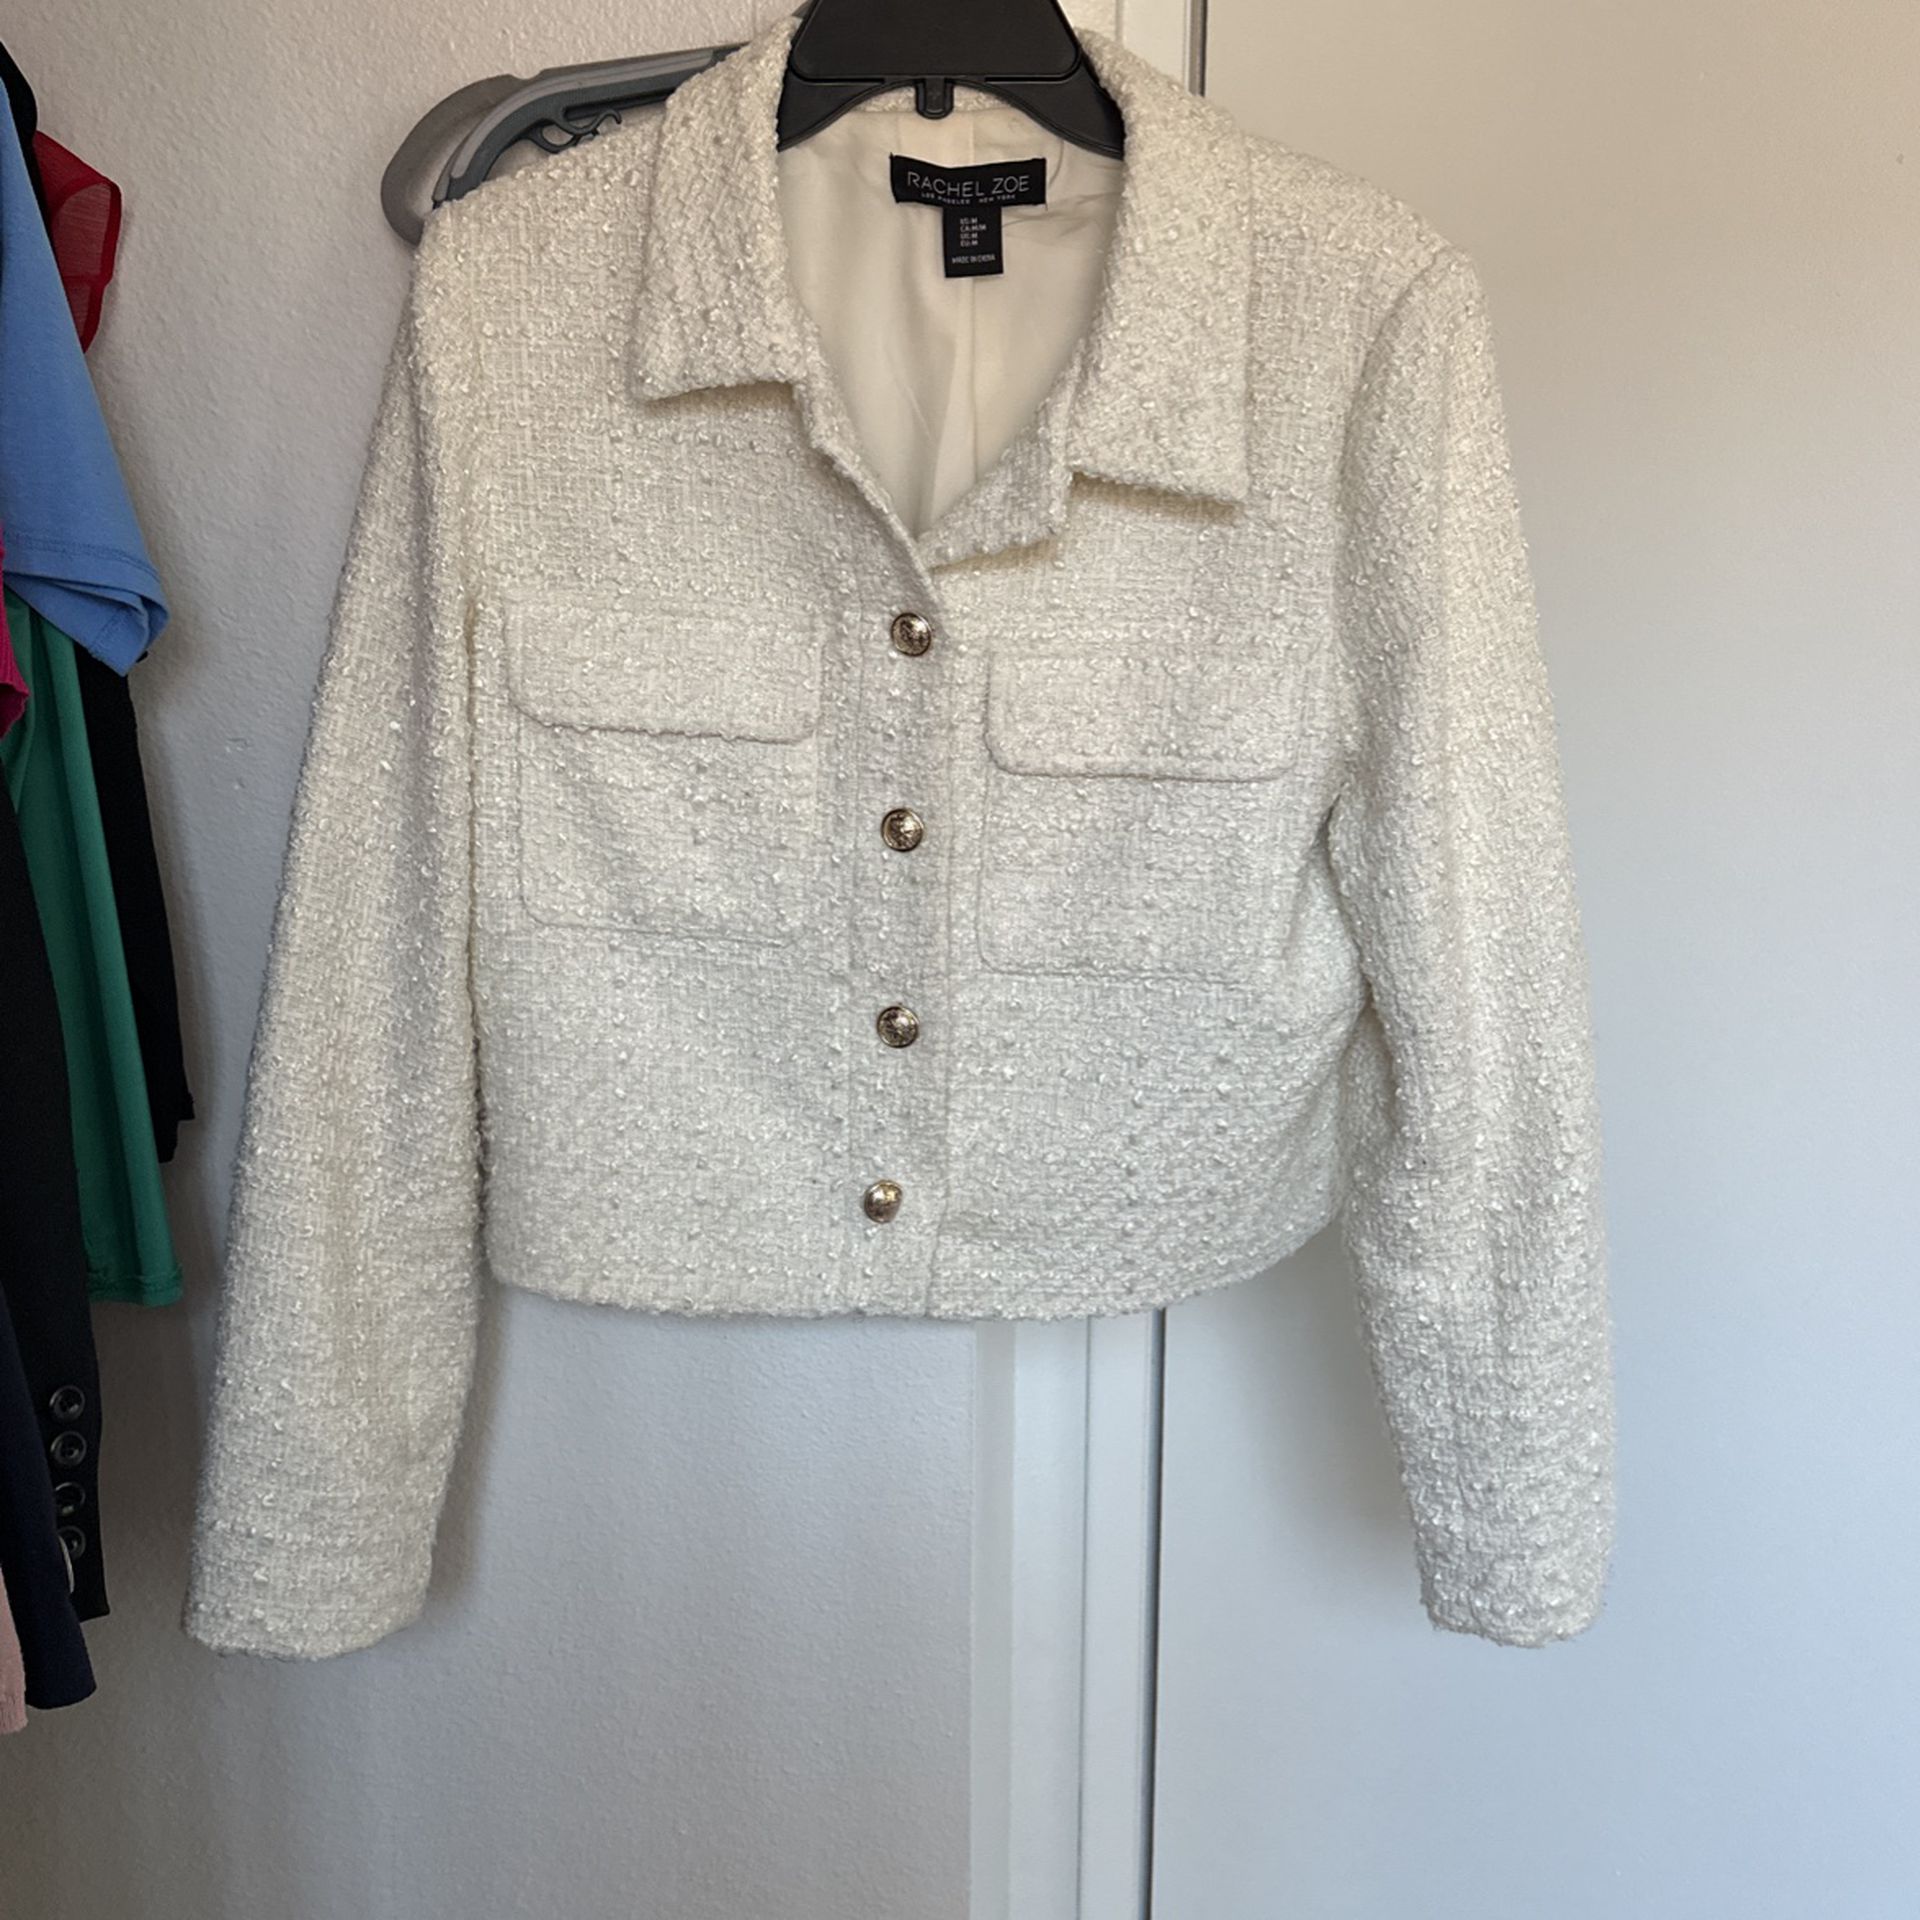 Rachel, Zoe jacket, blazer size medium off-white